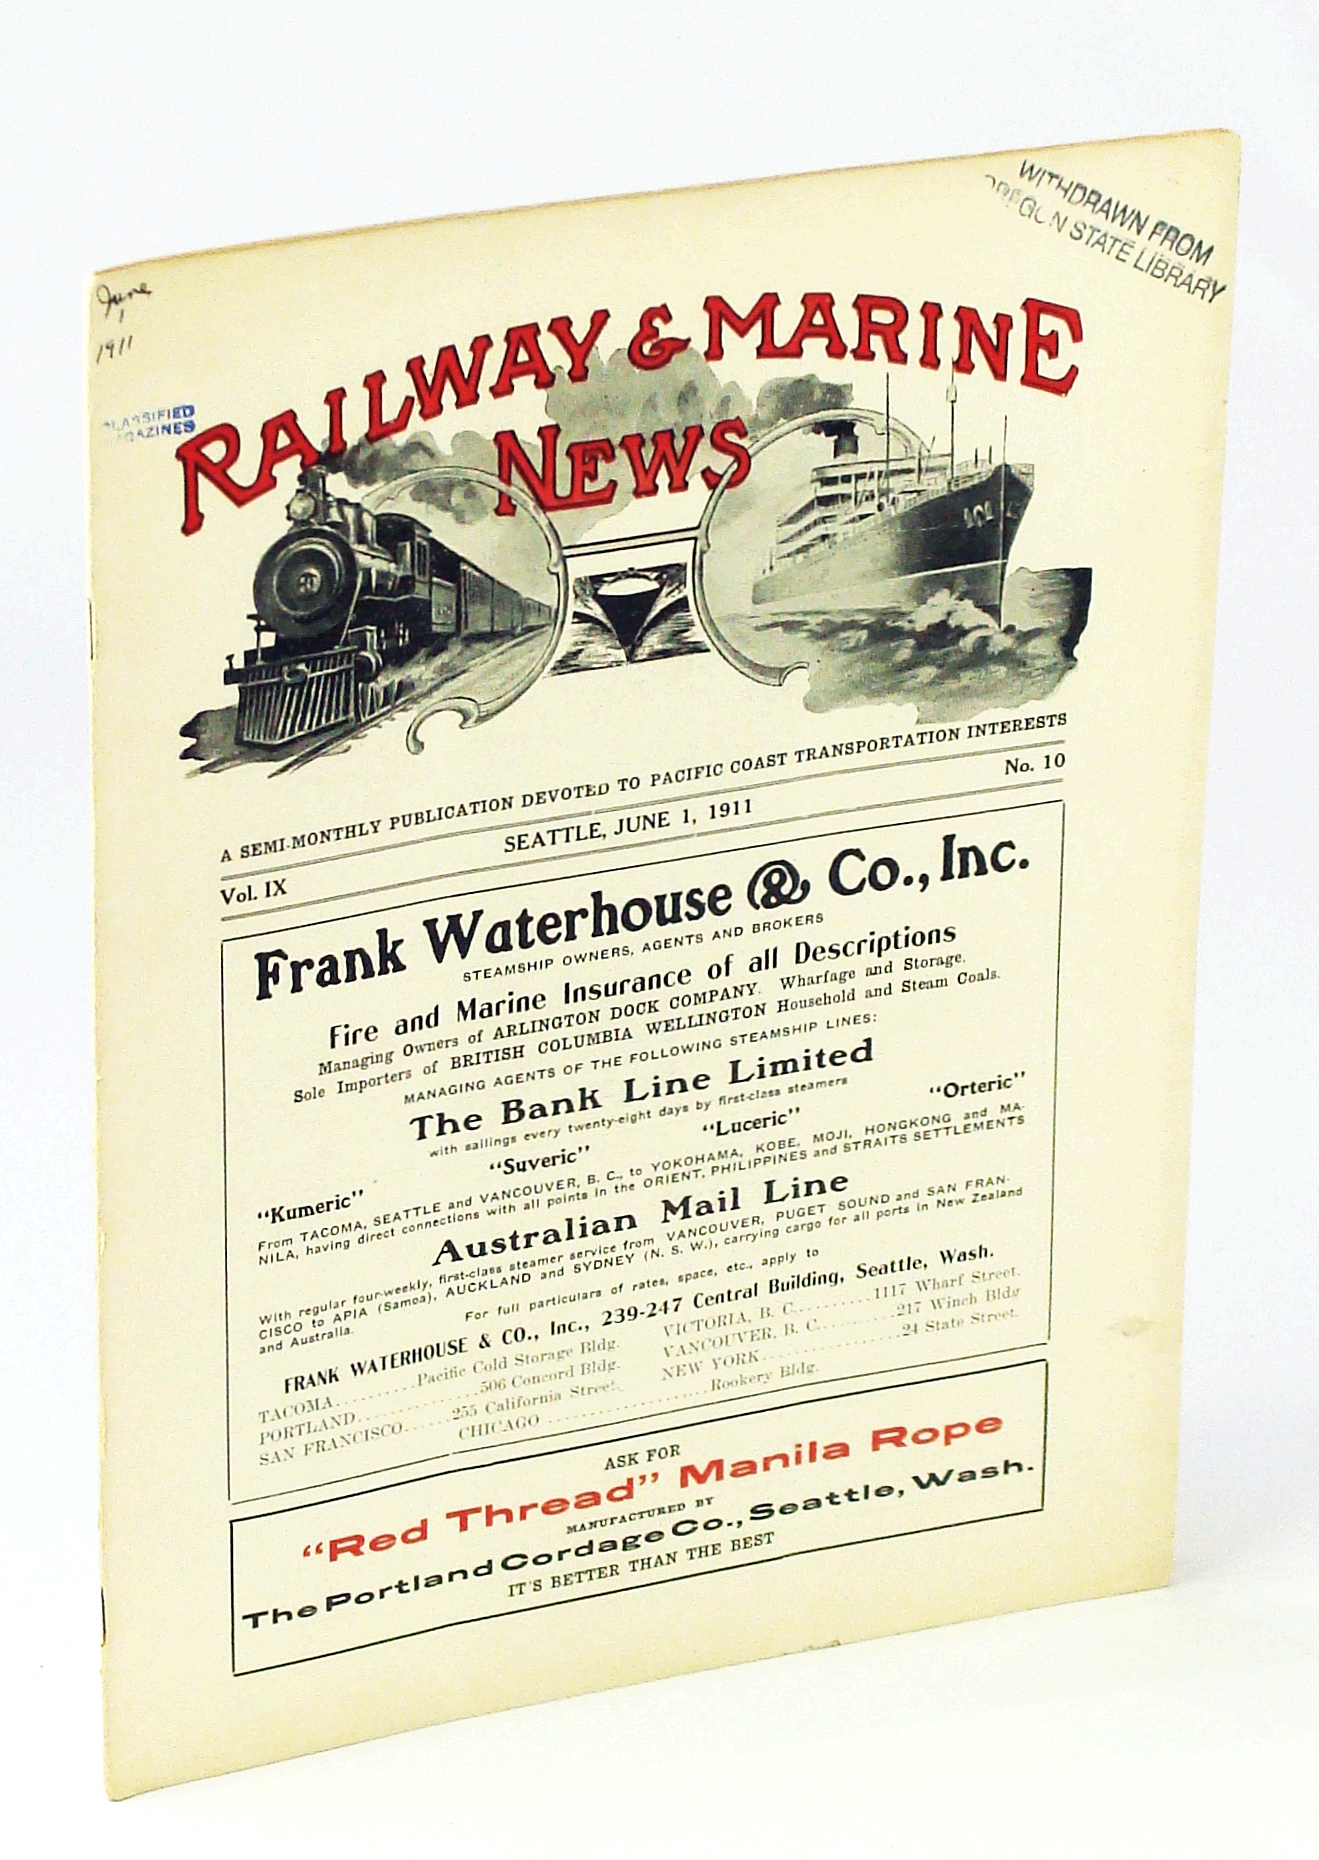 PARKINSON, J.P.; ET AL - Railway & Marine News, a Semi-Monthly Publication Devoted to Pacific Coast Transportation Interests, June 1, 1911, Vol. IX, No. 10 - Throngs Visit Seattle's New Oregon-Washington Passenger Terminal of the O.W. R. & N. Co.